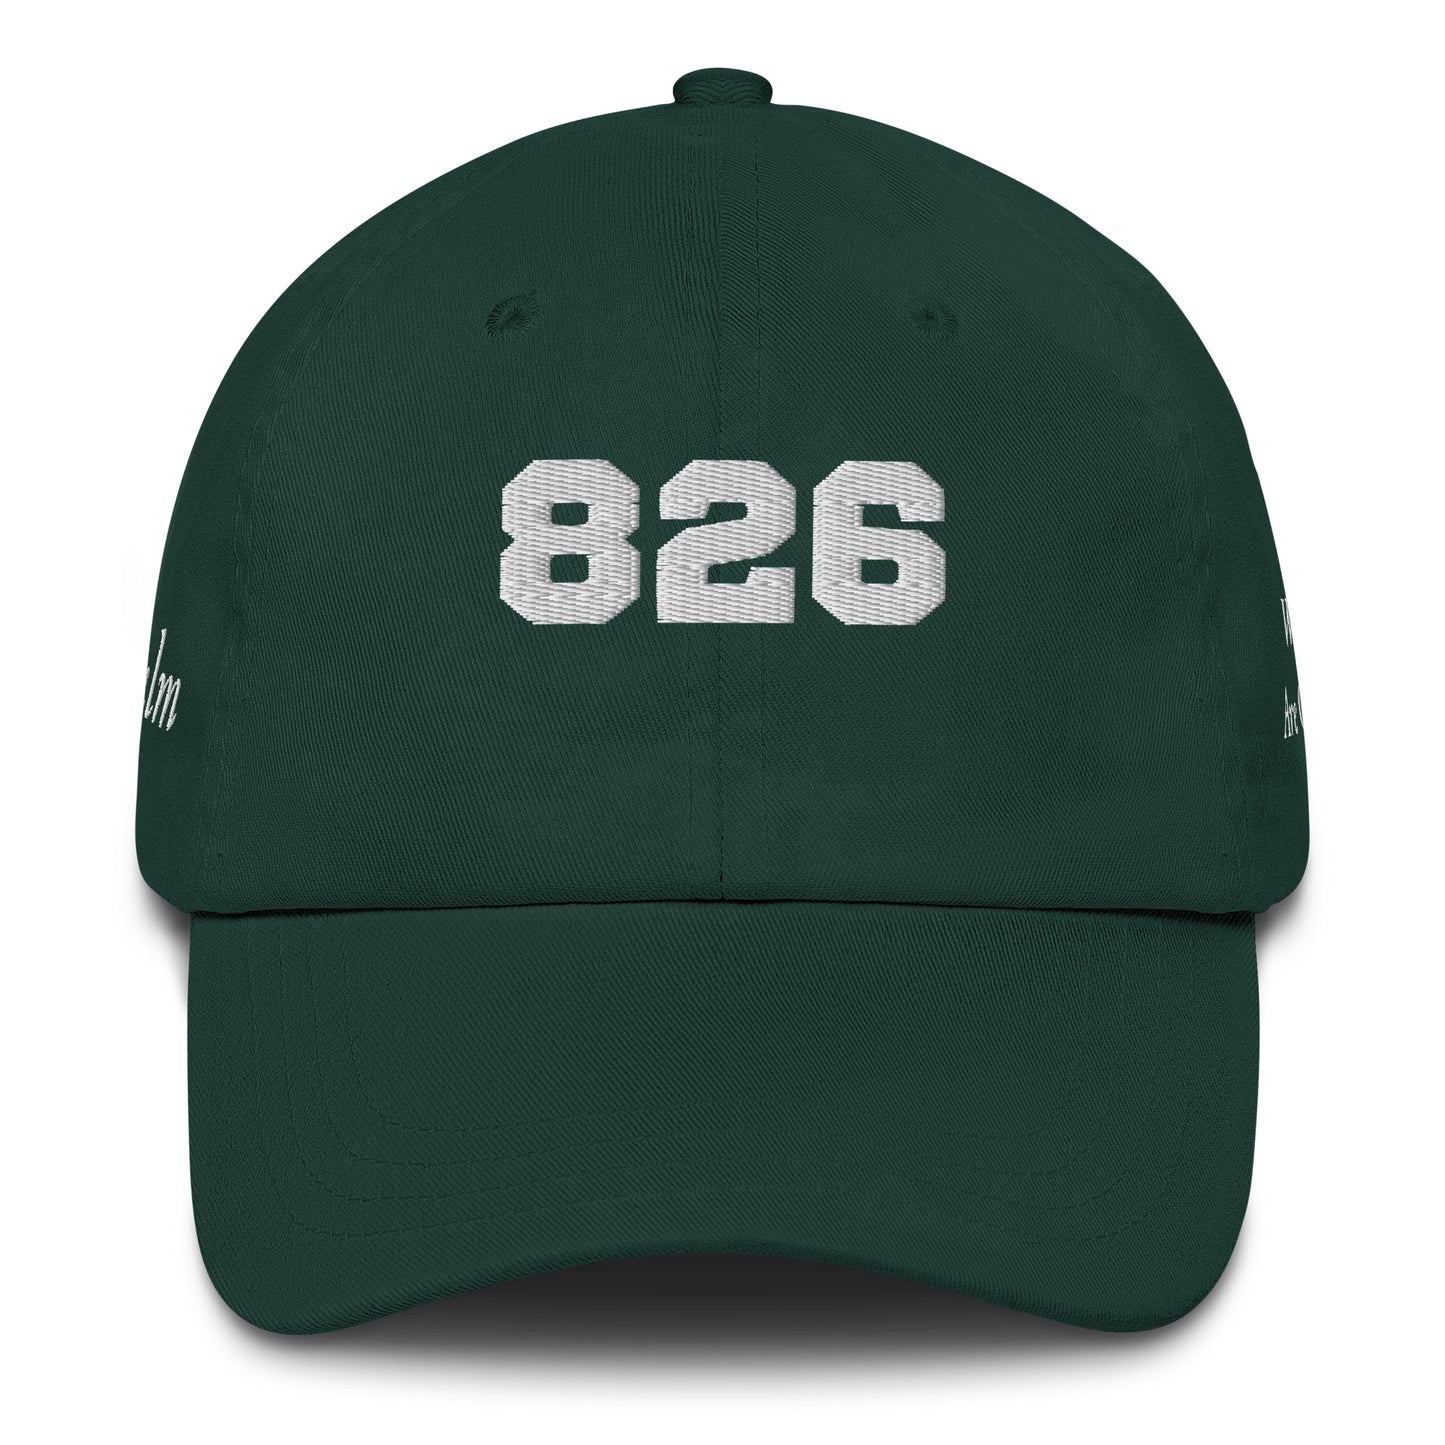 826 "WE ARE GODS" DAD HAT